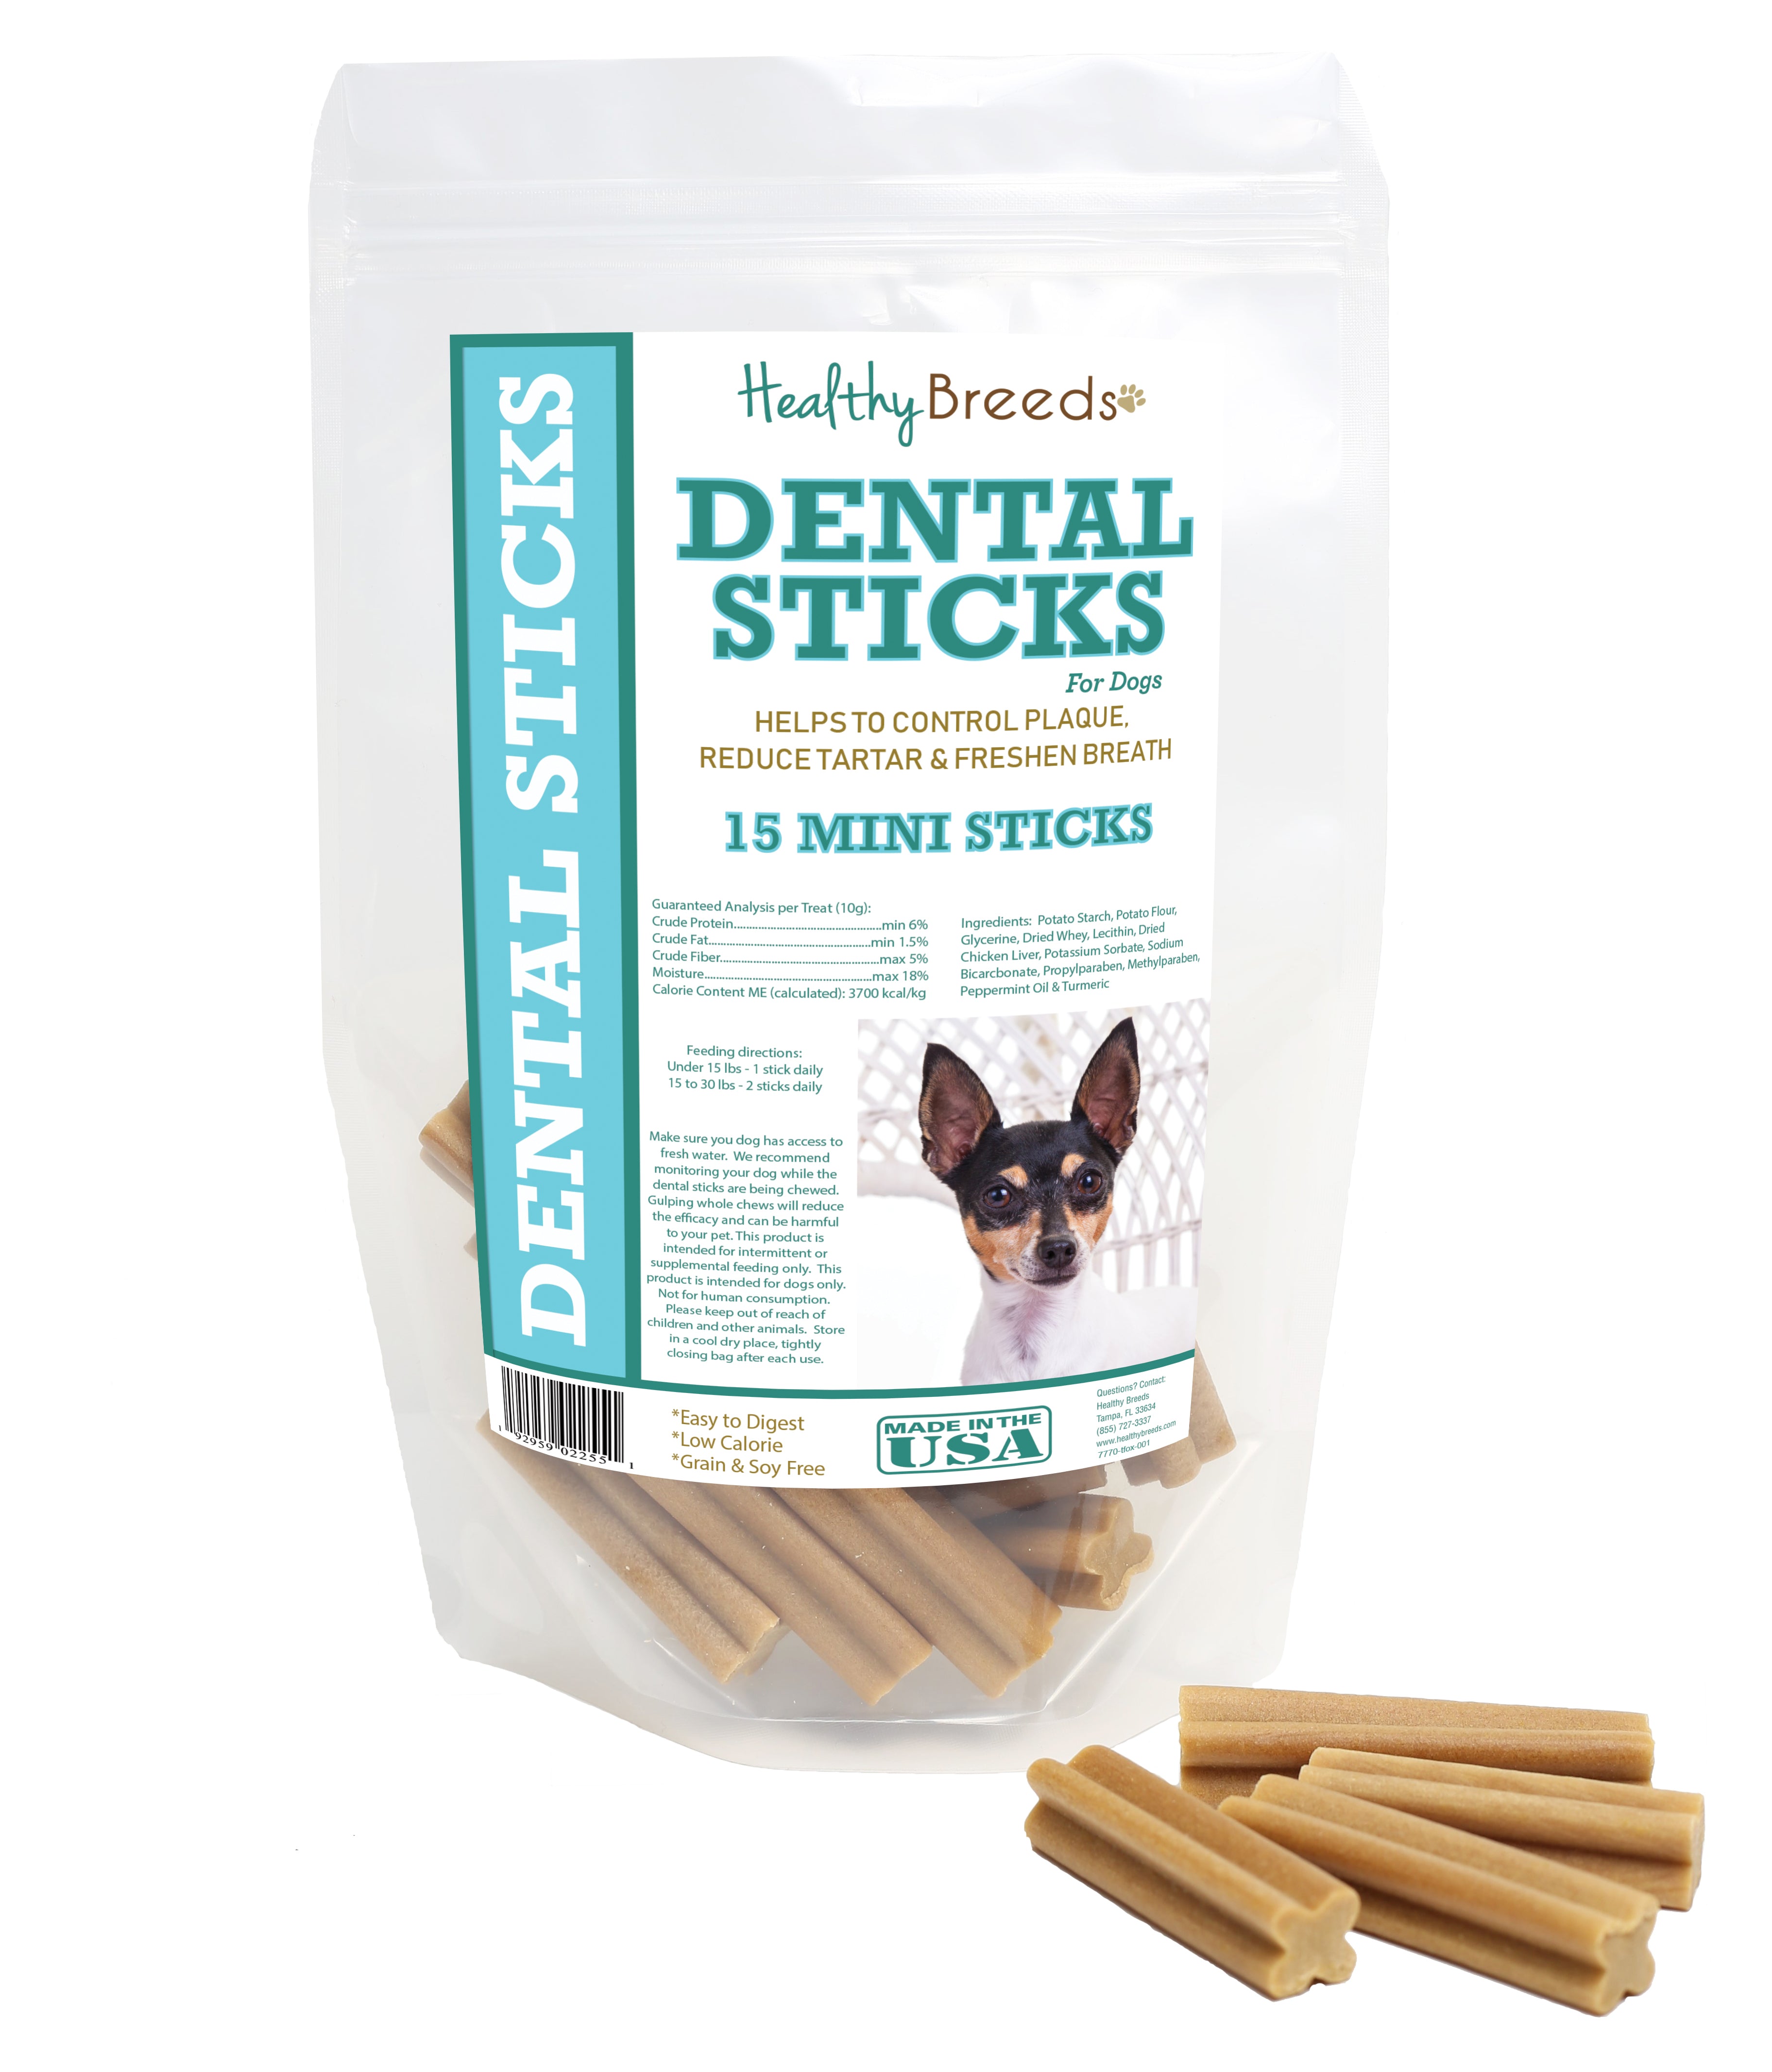 Toy Fox Terrier Dental Sticks Minis 15 Count